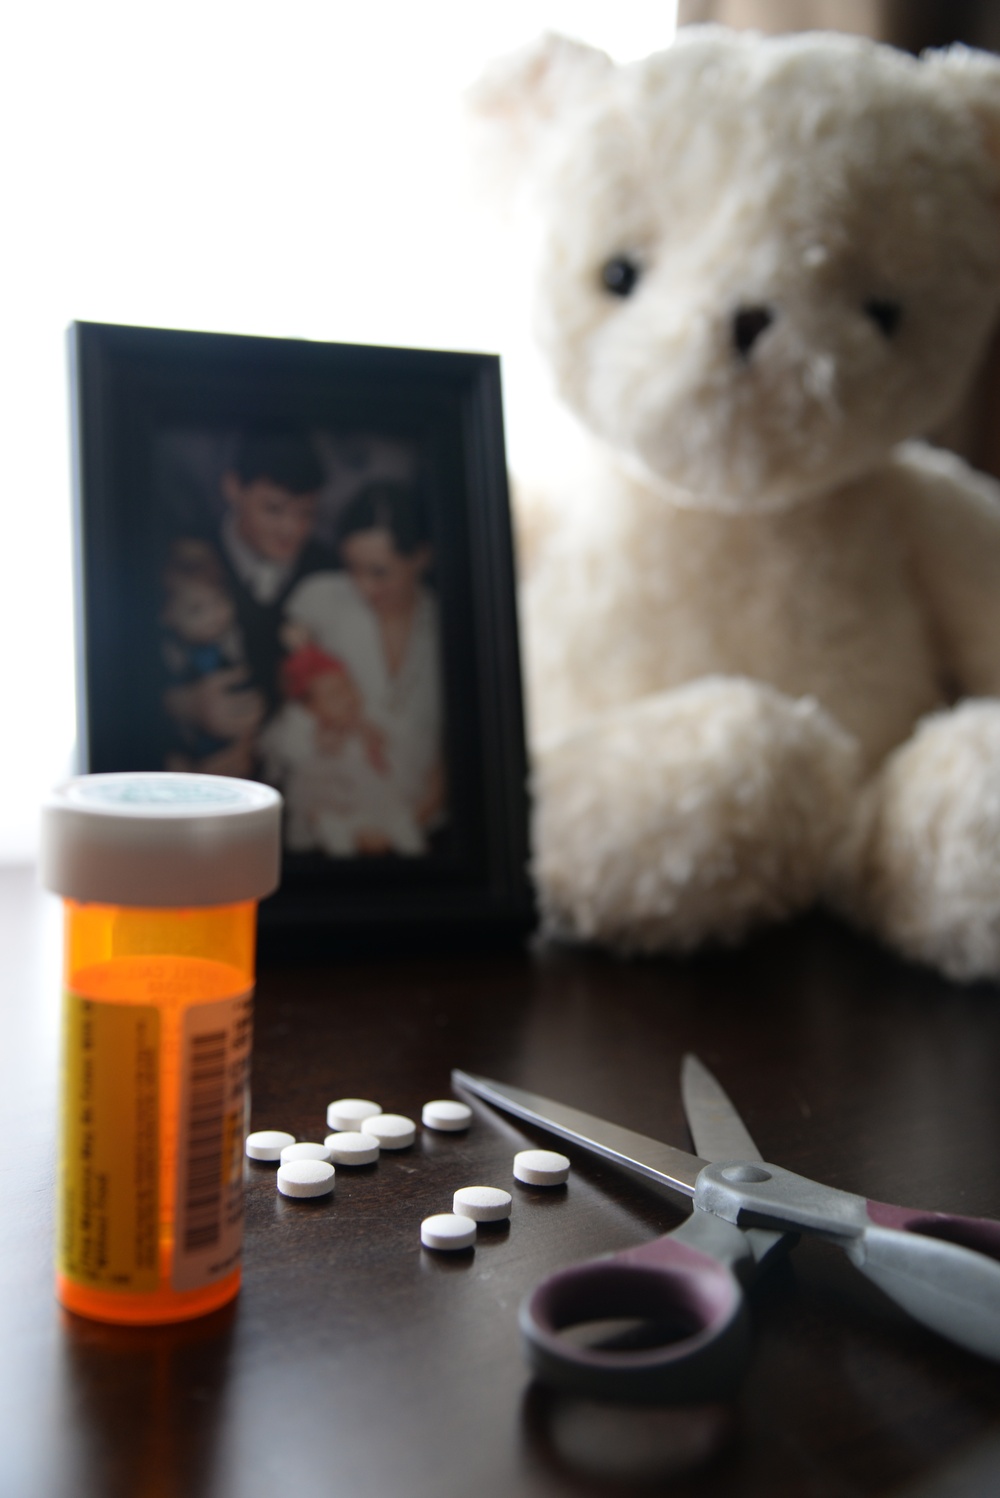 Prescription drug abuse, not a victimless crime